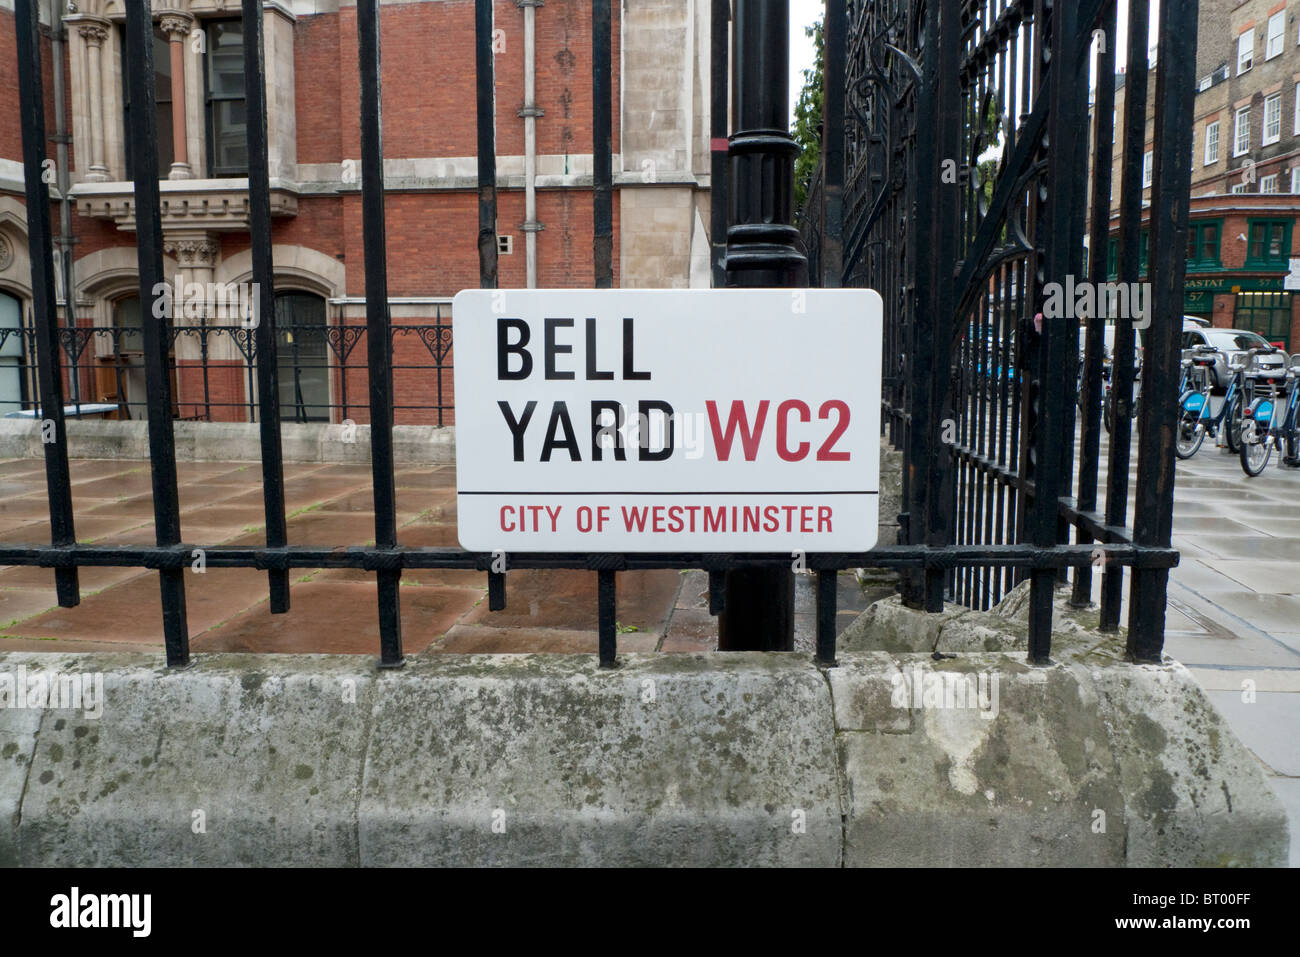 Bell Yard WC2 City of Westminster strada segno sul retro del Royal Courts of Justice vicino al cantiere di Star & London Chancery Ln England Regno Unito KATHY DEWITT Foto Stock